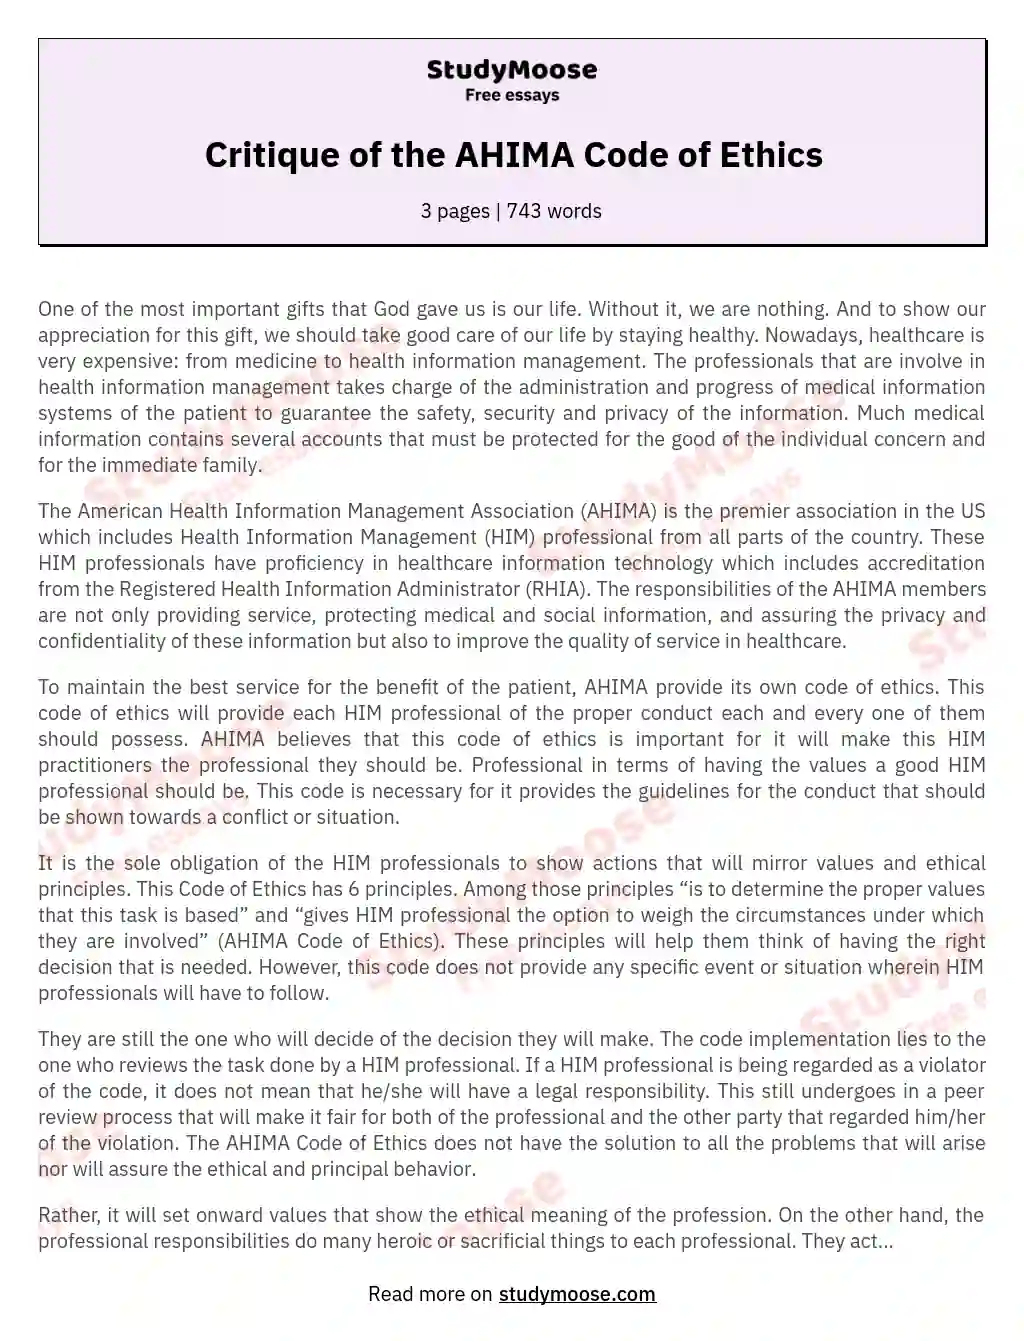 Critique of the AHIMA Code of Ethics essay